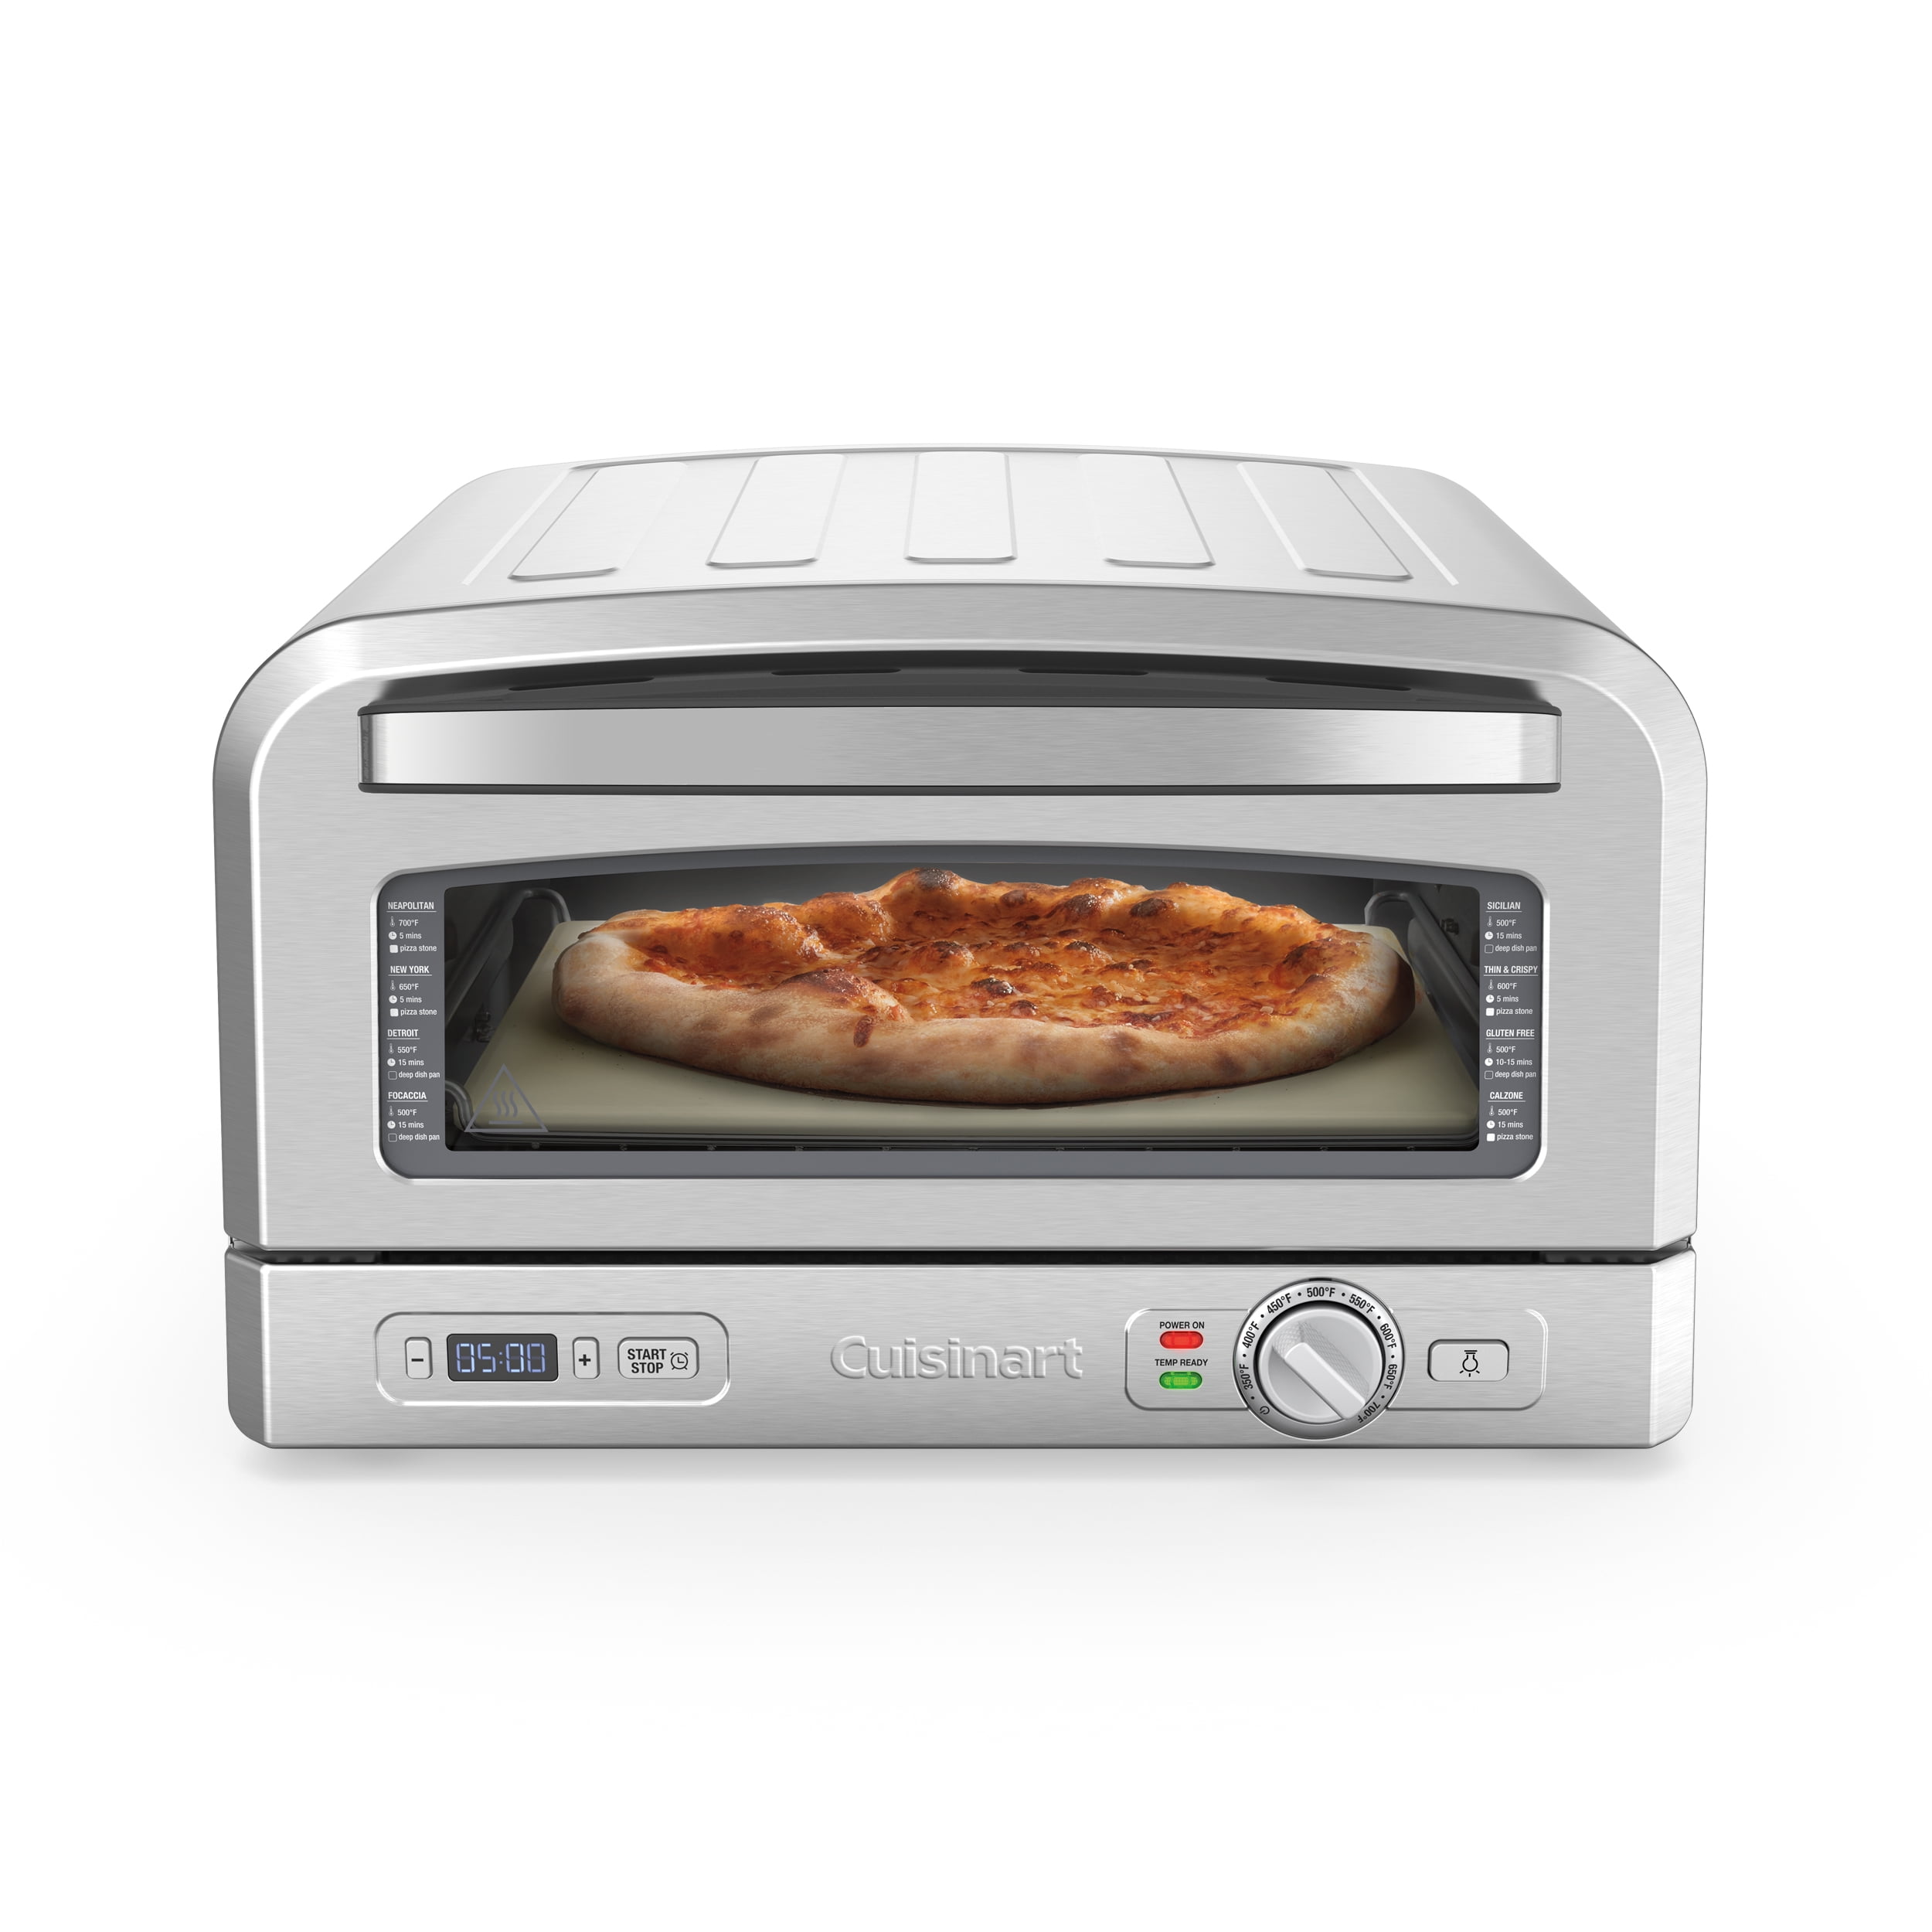 Hamilton Beach Enclosed Pizza Oven Maker, Model# 31700 kitchen appliances  NEW!!